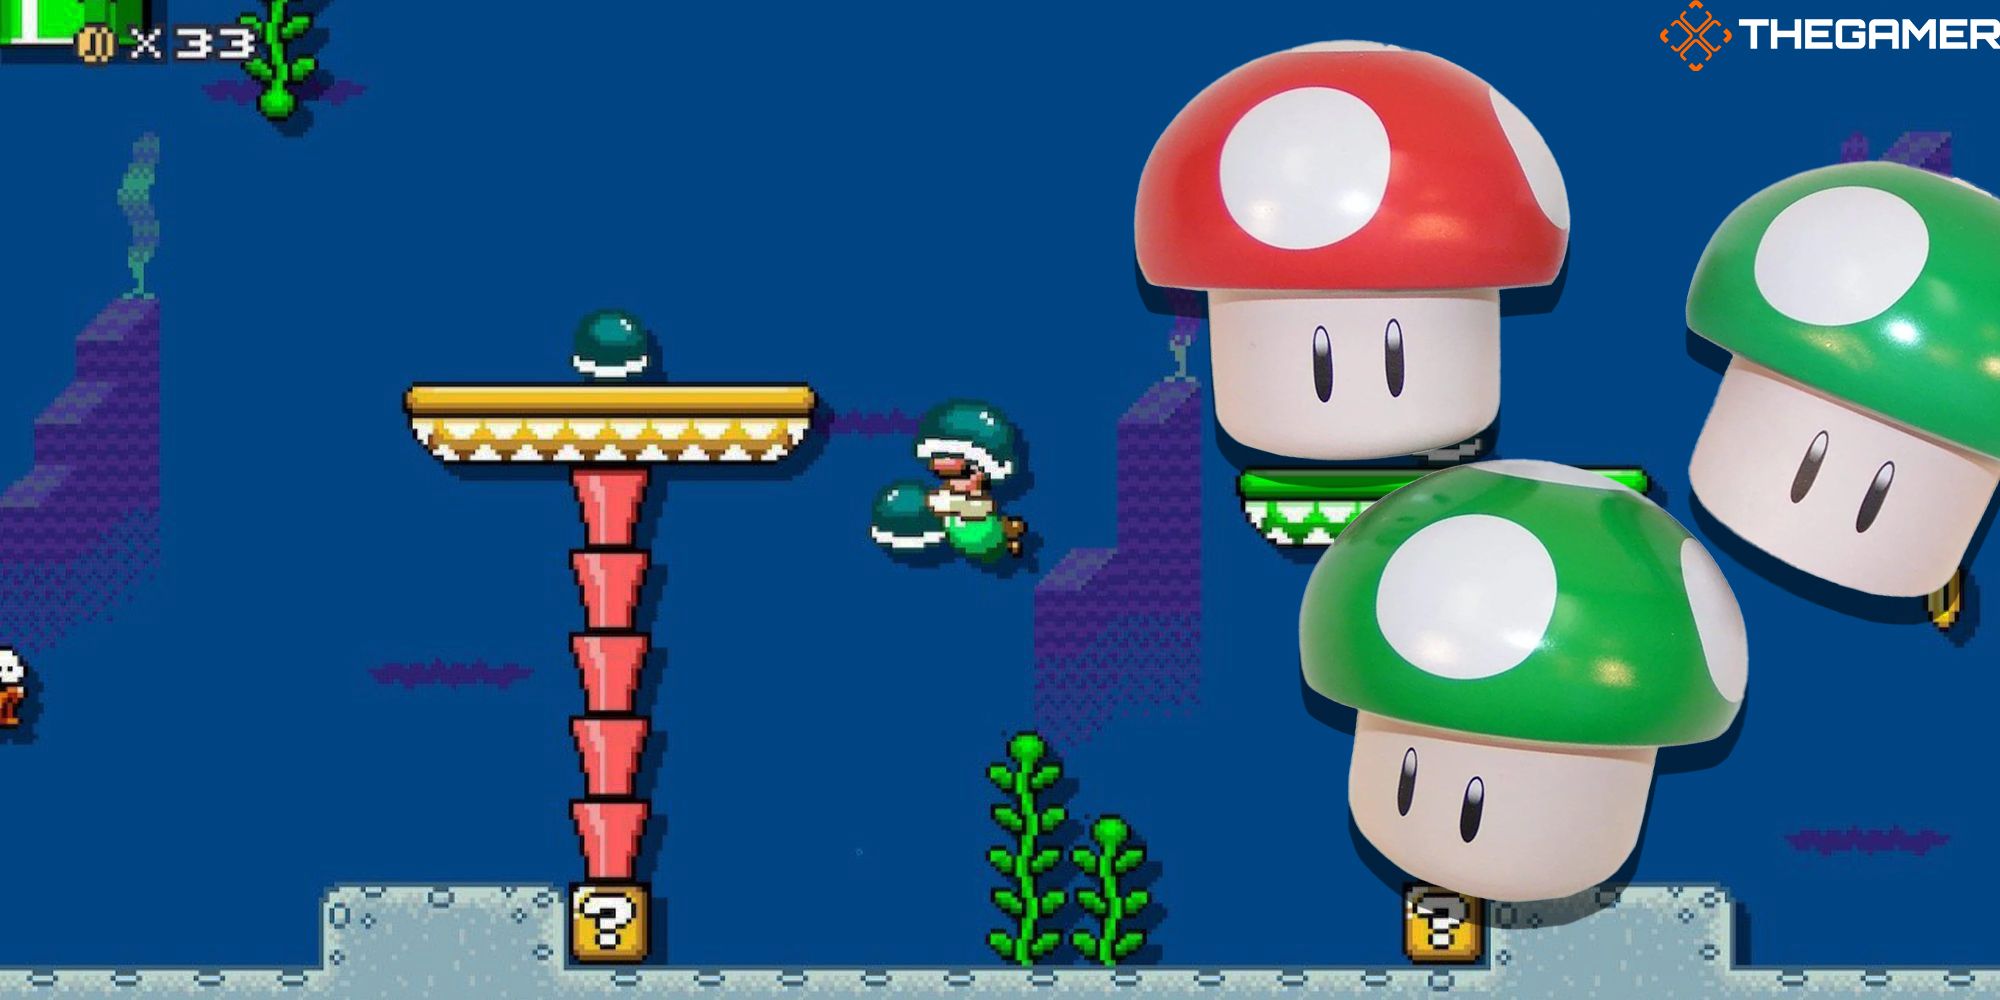 Green and Red Nintendo mushroom caps against a screenshot from Super Mario Bros 5. Custom image for TG.